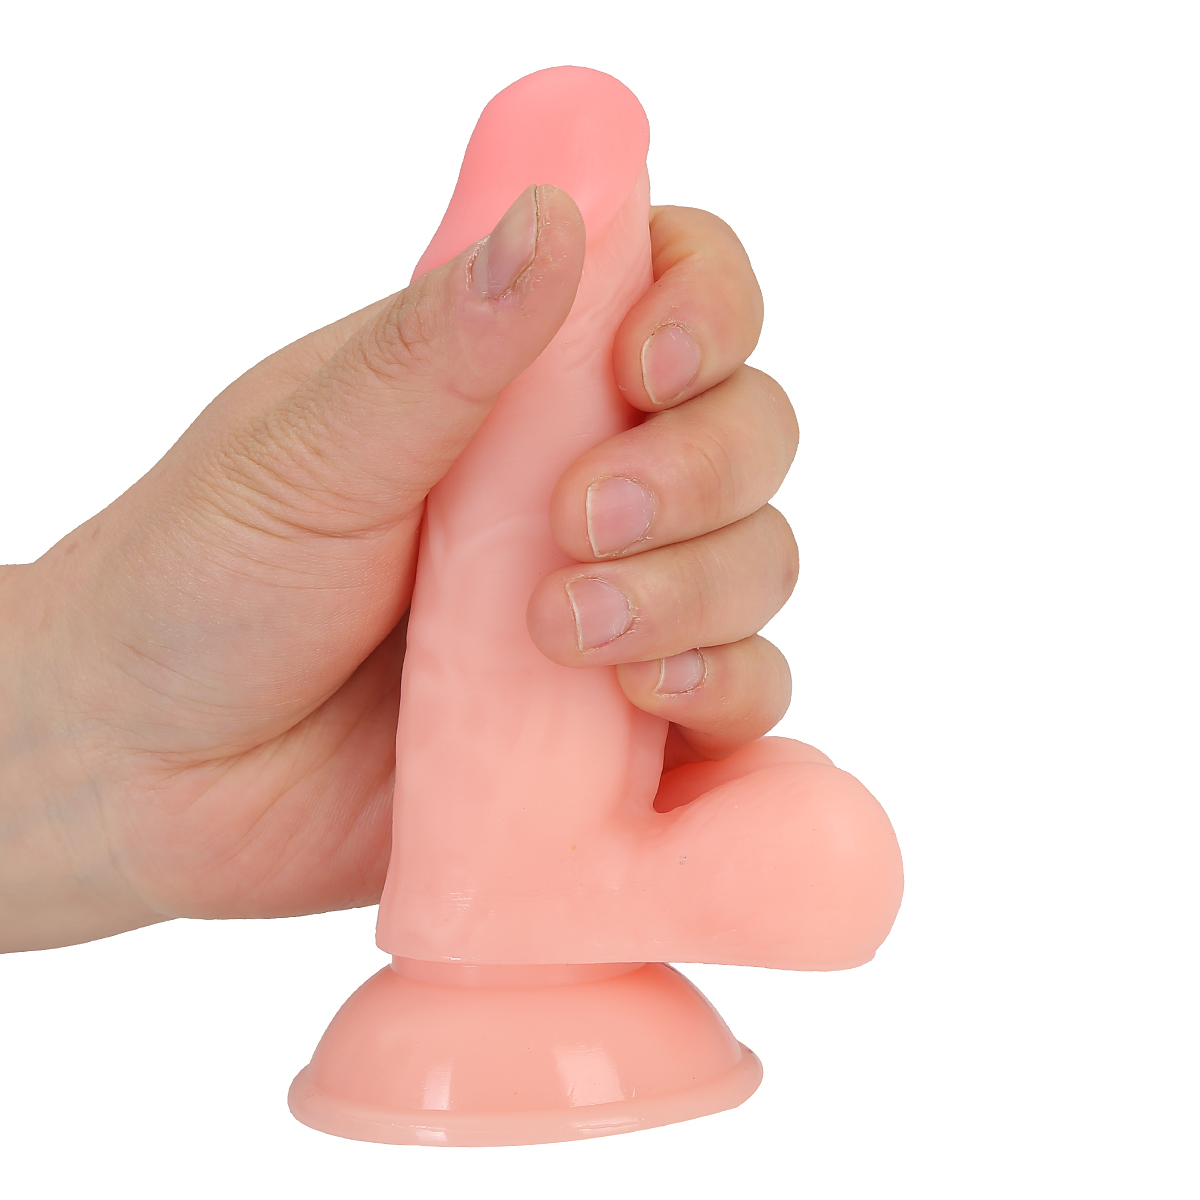 Simulated penis with suction cup, vestibular anal plug, adult product, fun female masturbation artifact, fake penis dildo wl231